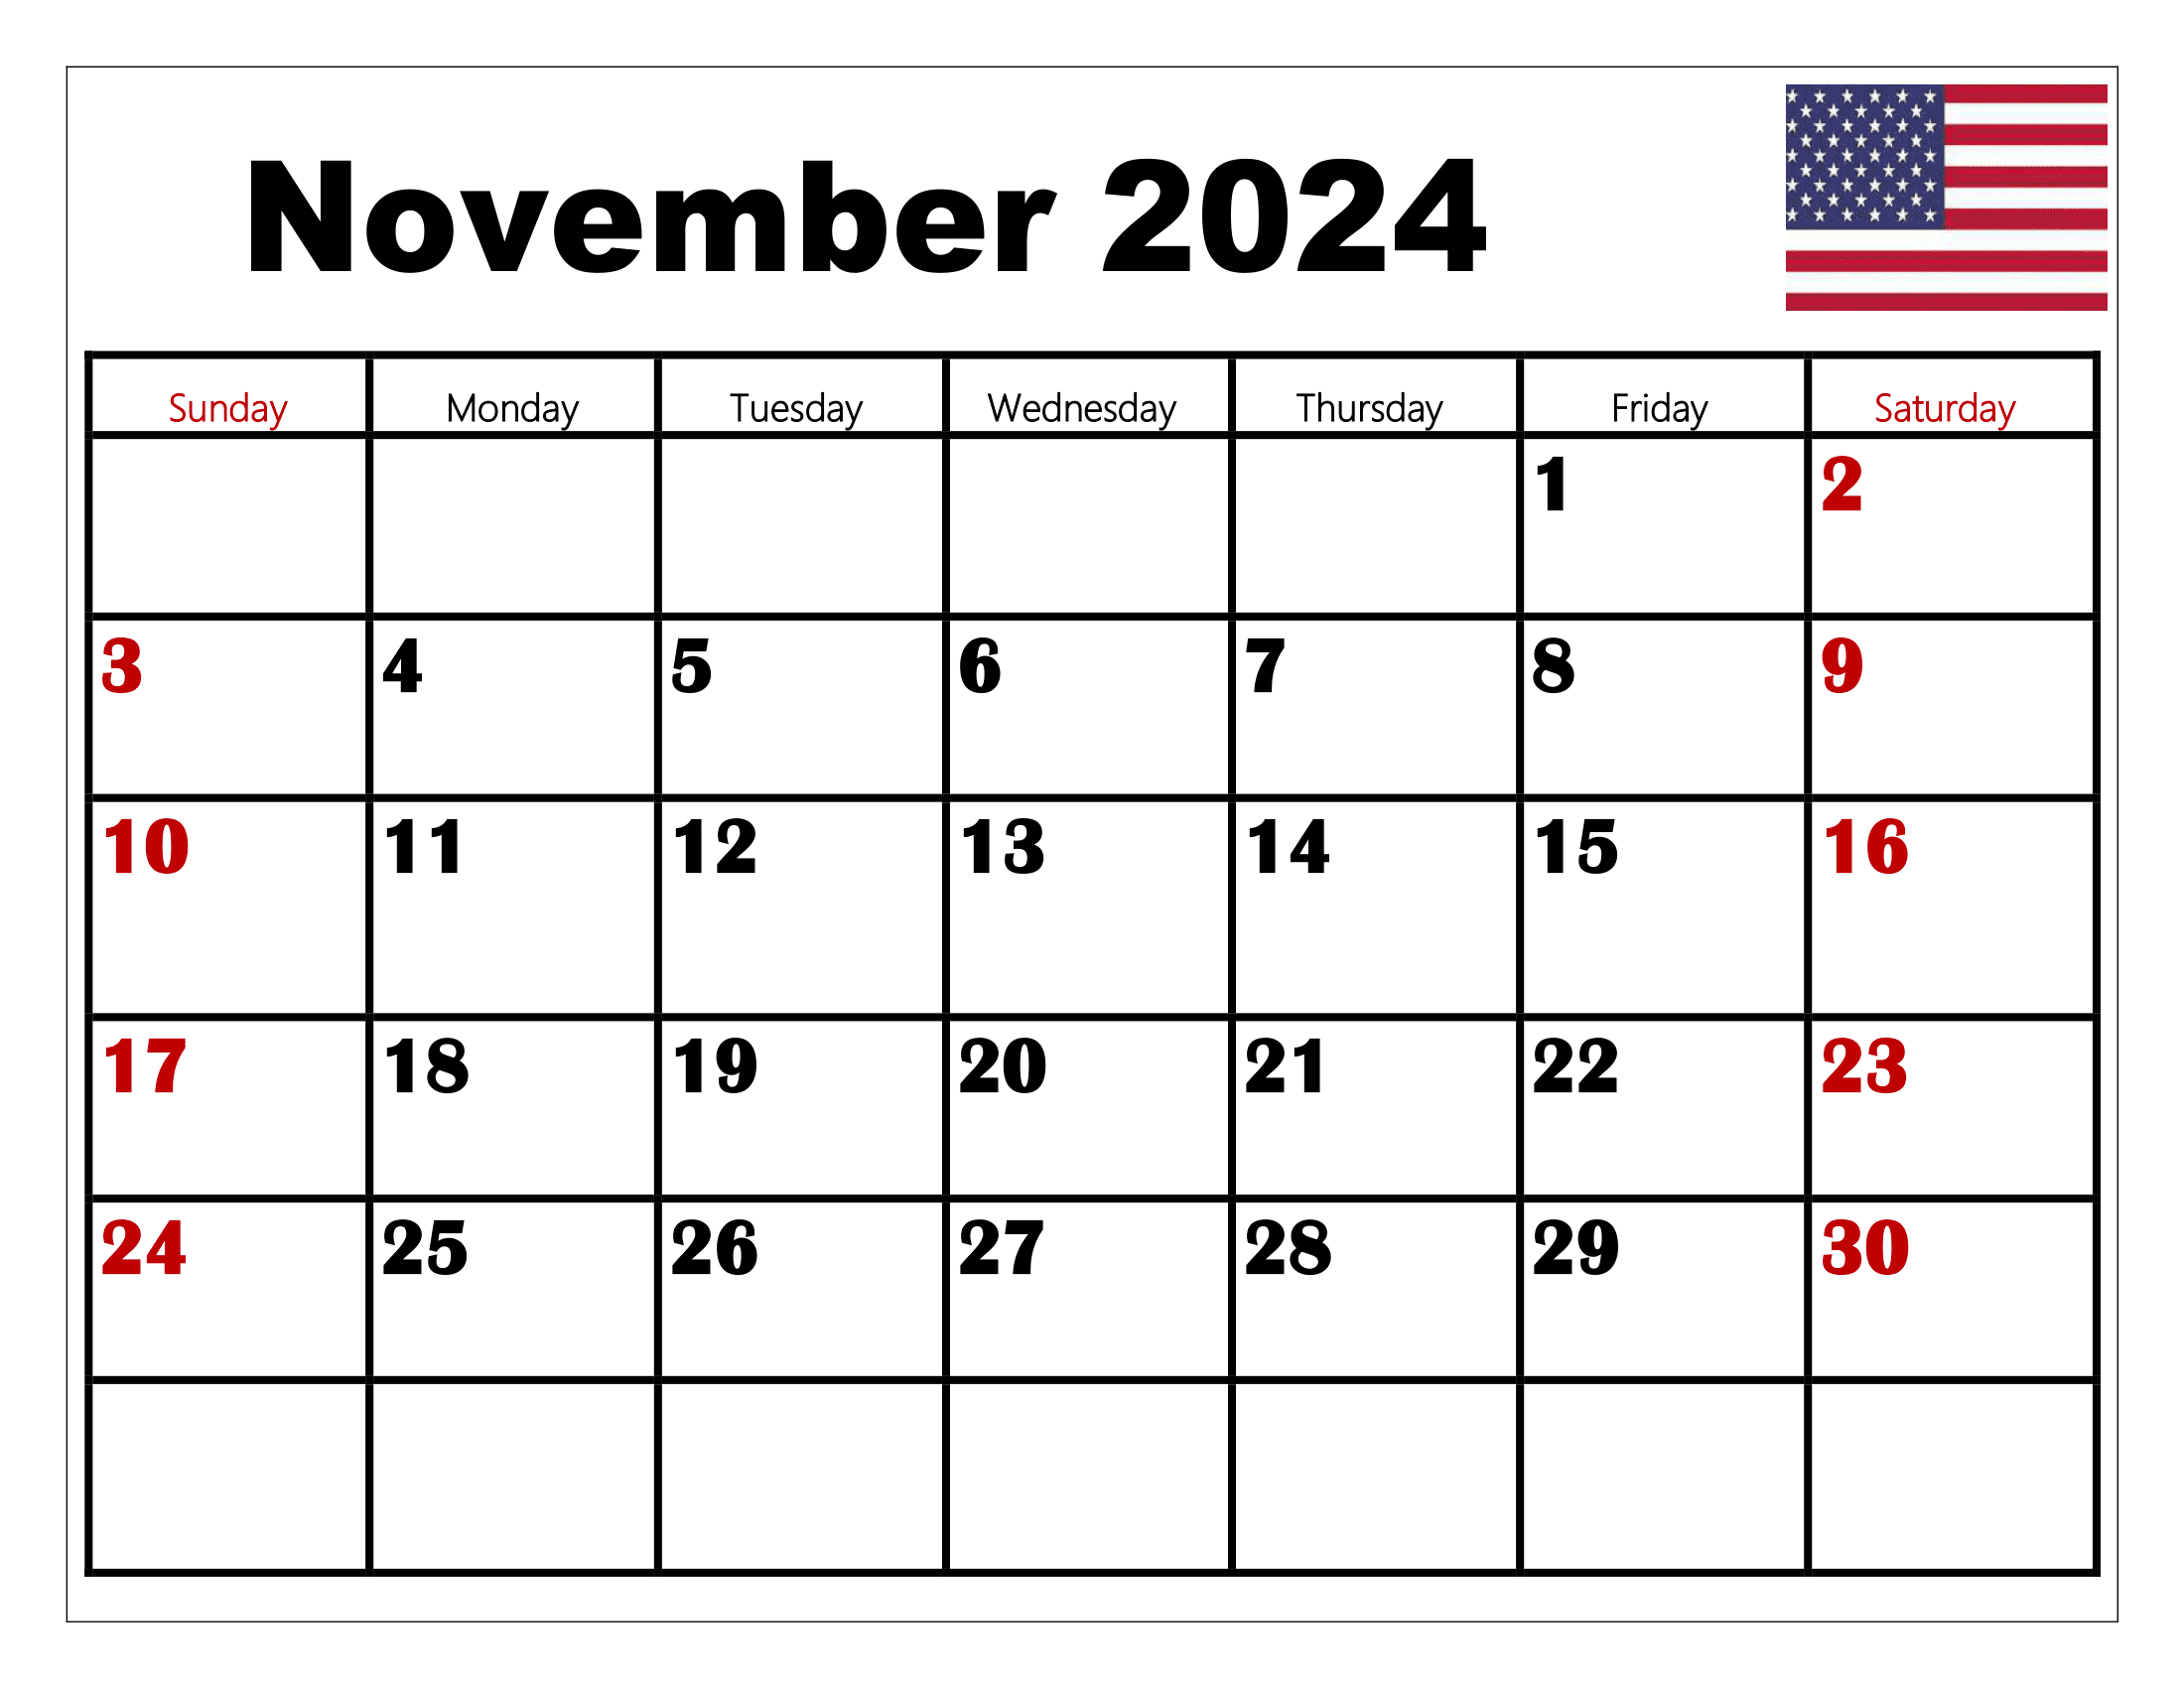 November 2024 Calendar Printable Pdf Template With Holidays for November 2024 Calendar Printable